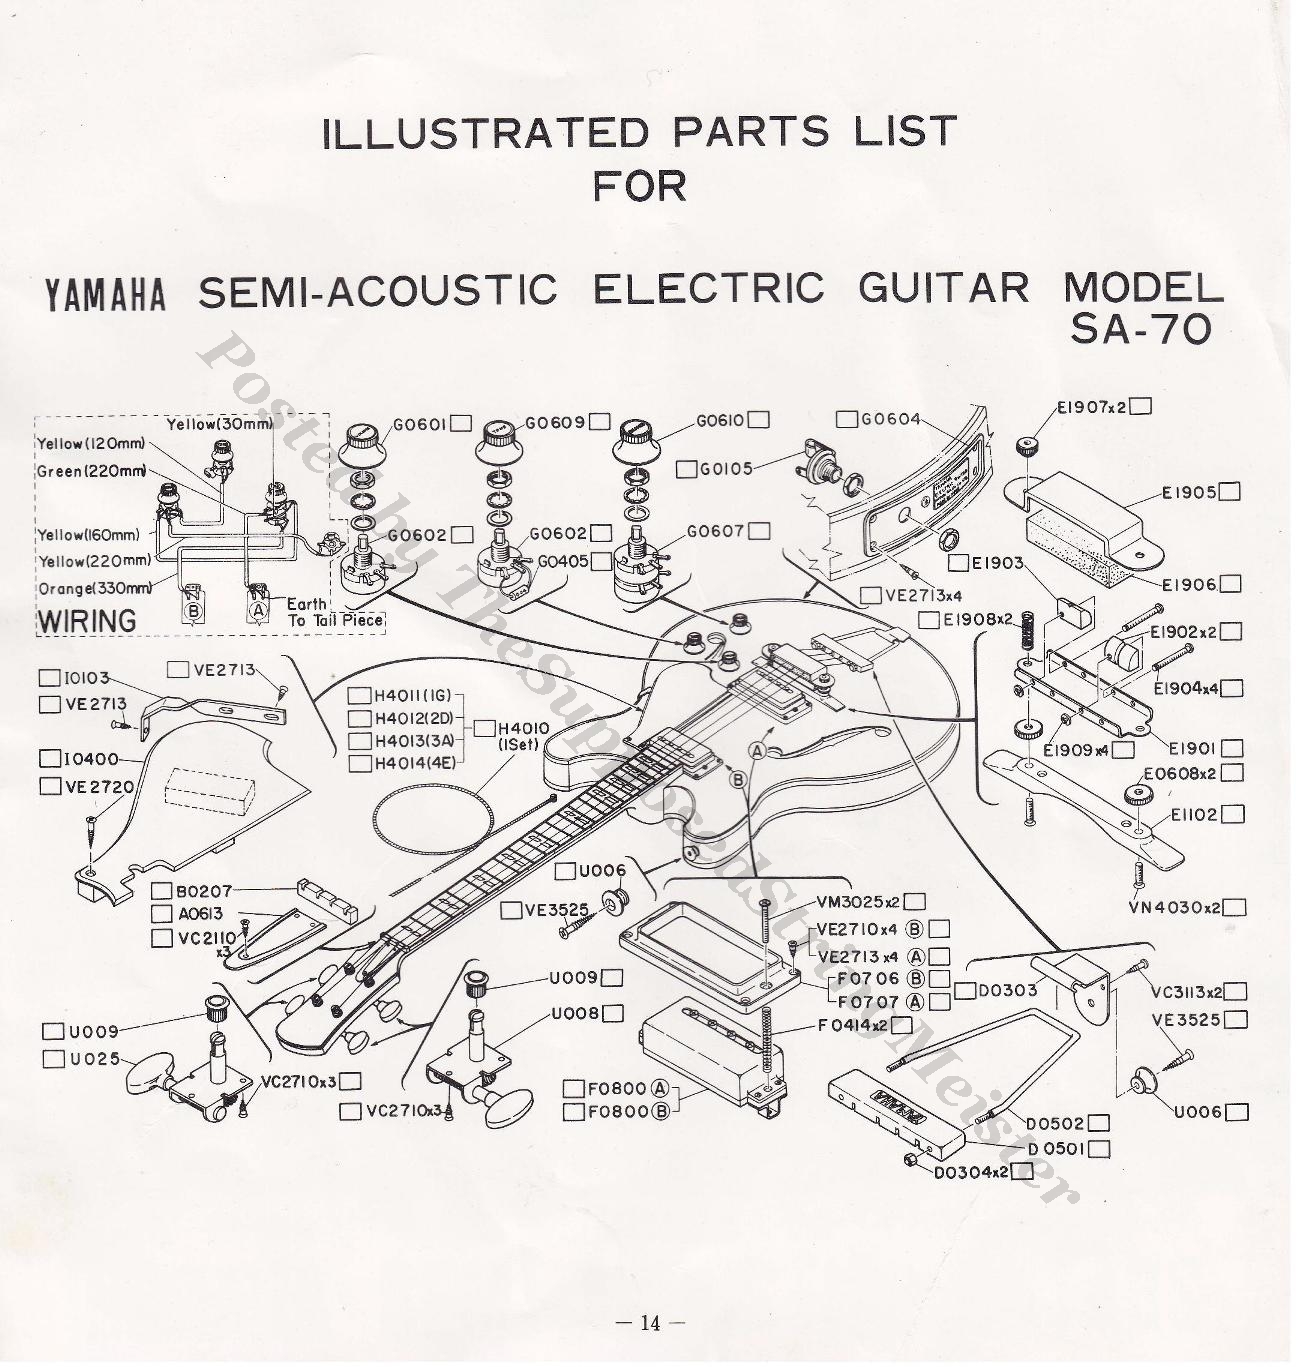 SA-70 (Yamaha Guitar Booklet Page 14 - Illustrated Parts List) Full